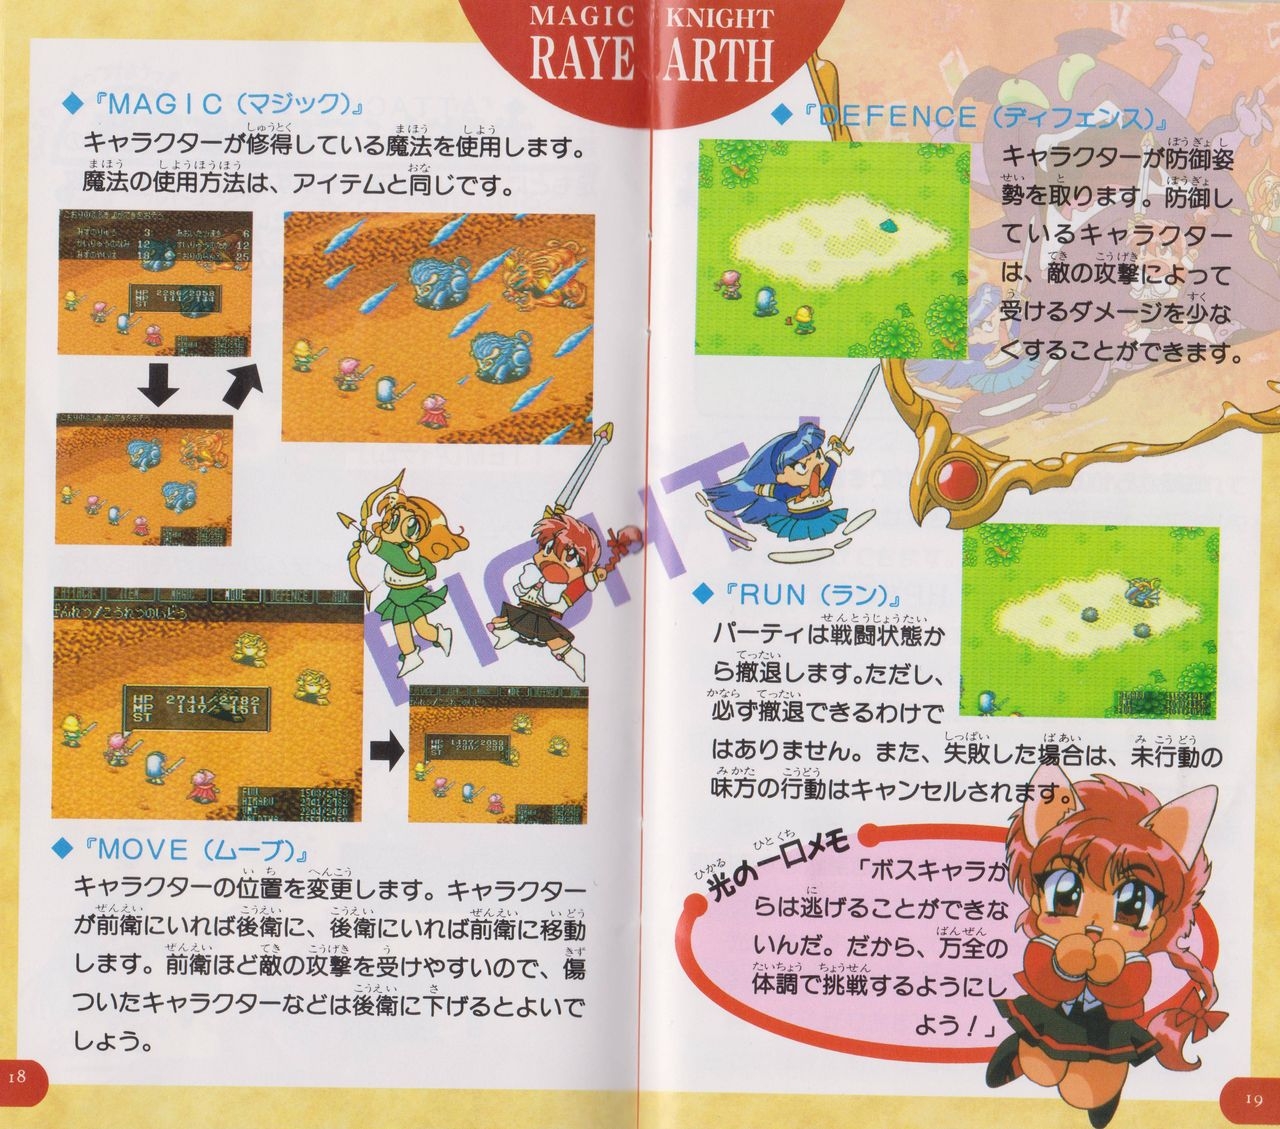 Magic Knight Rayearth - Box & Manual Scans [Super Famicom] 12